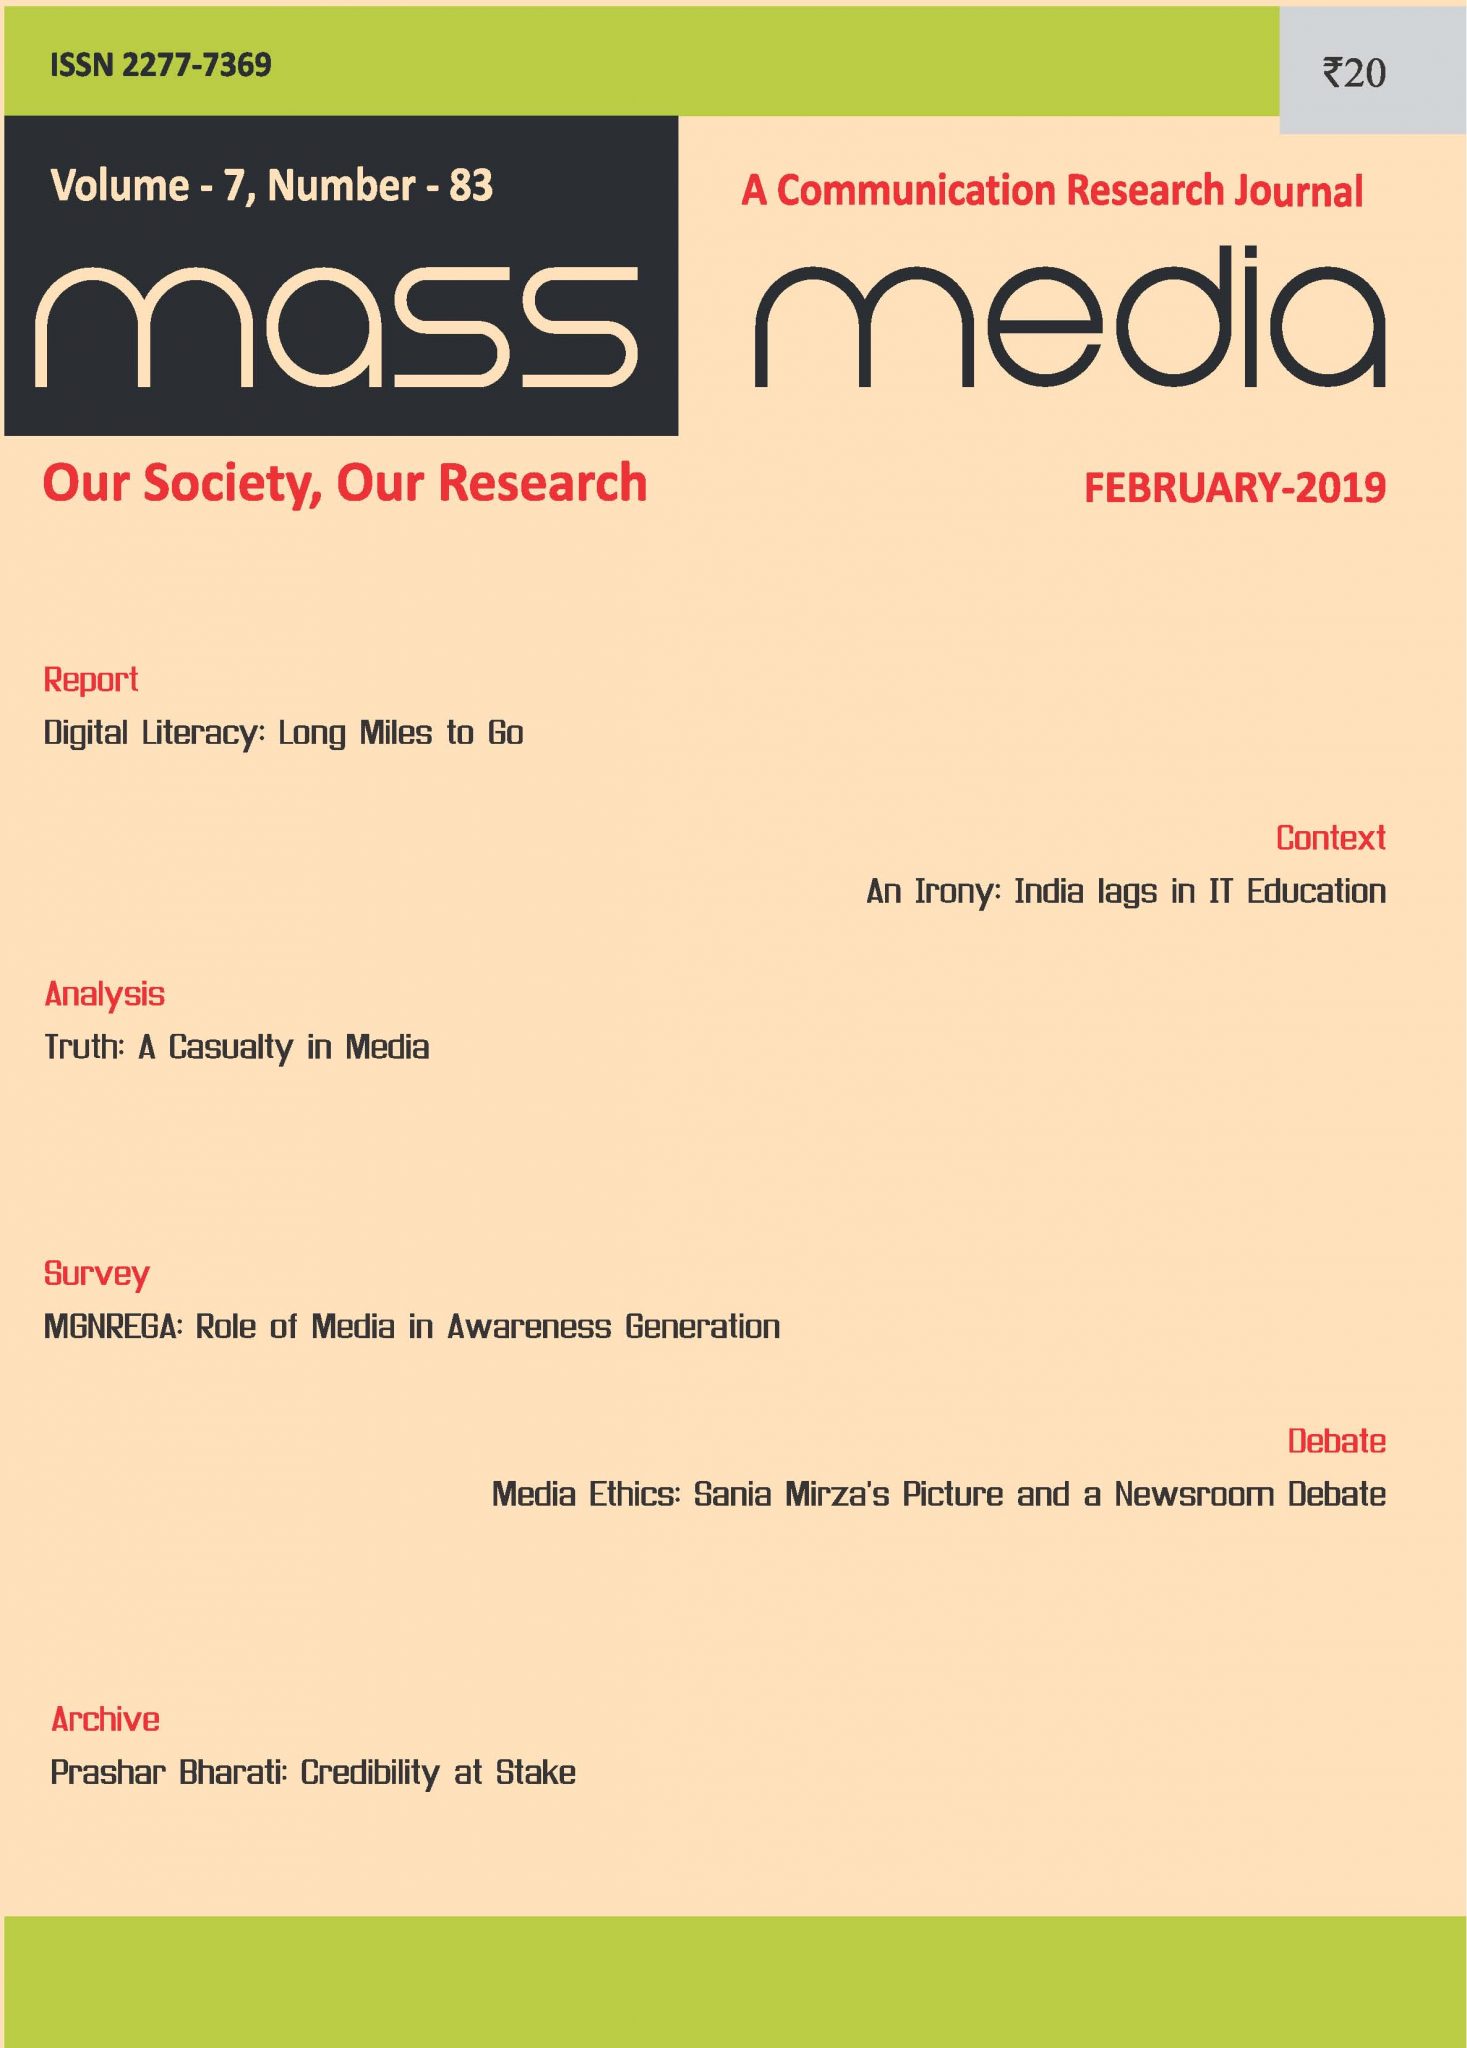 Mass Media (February 2019)